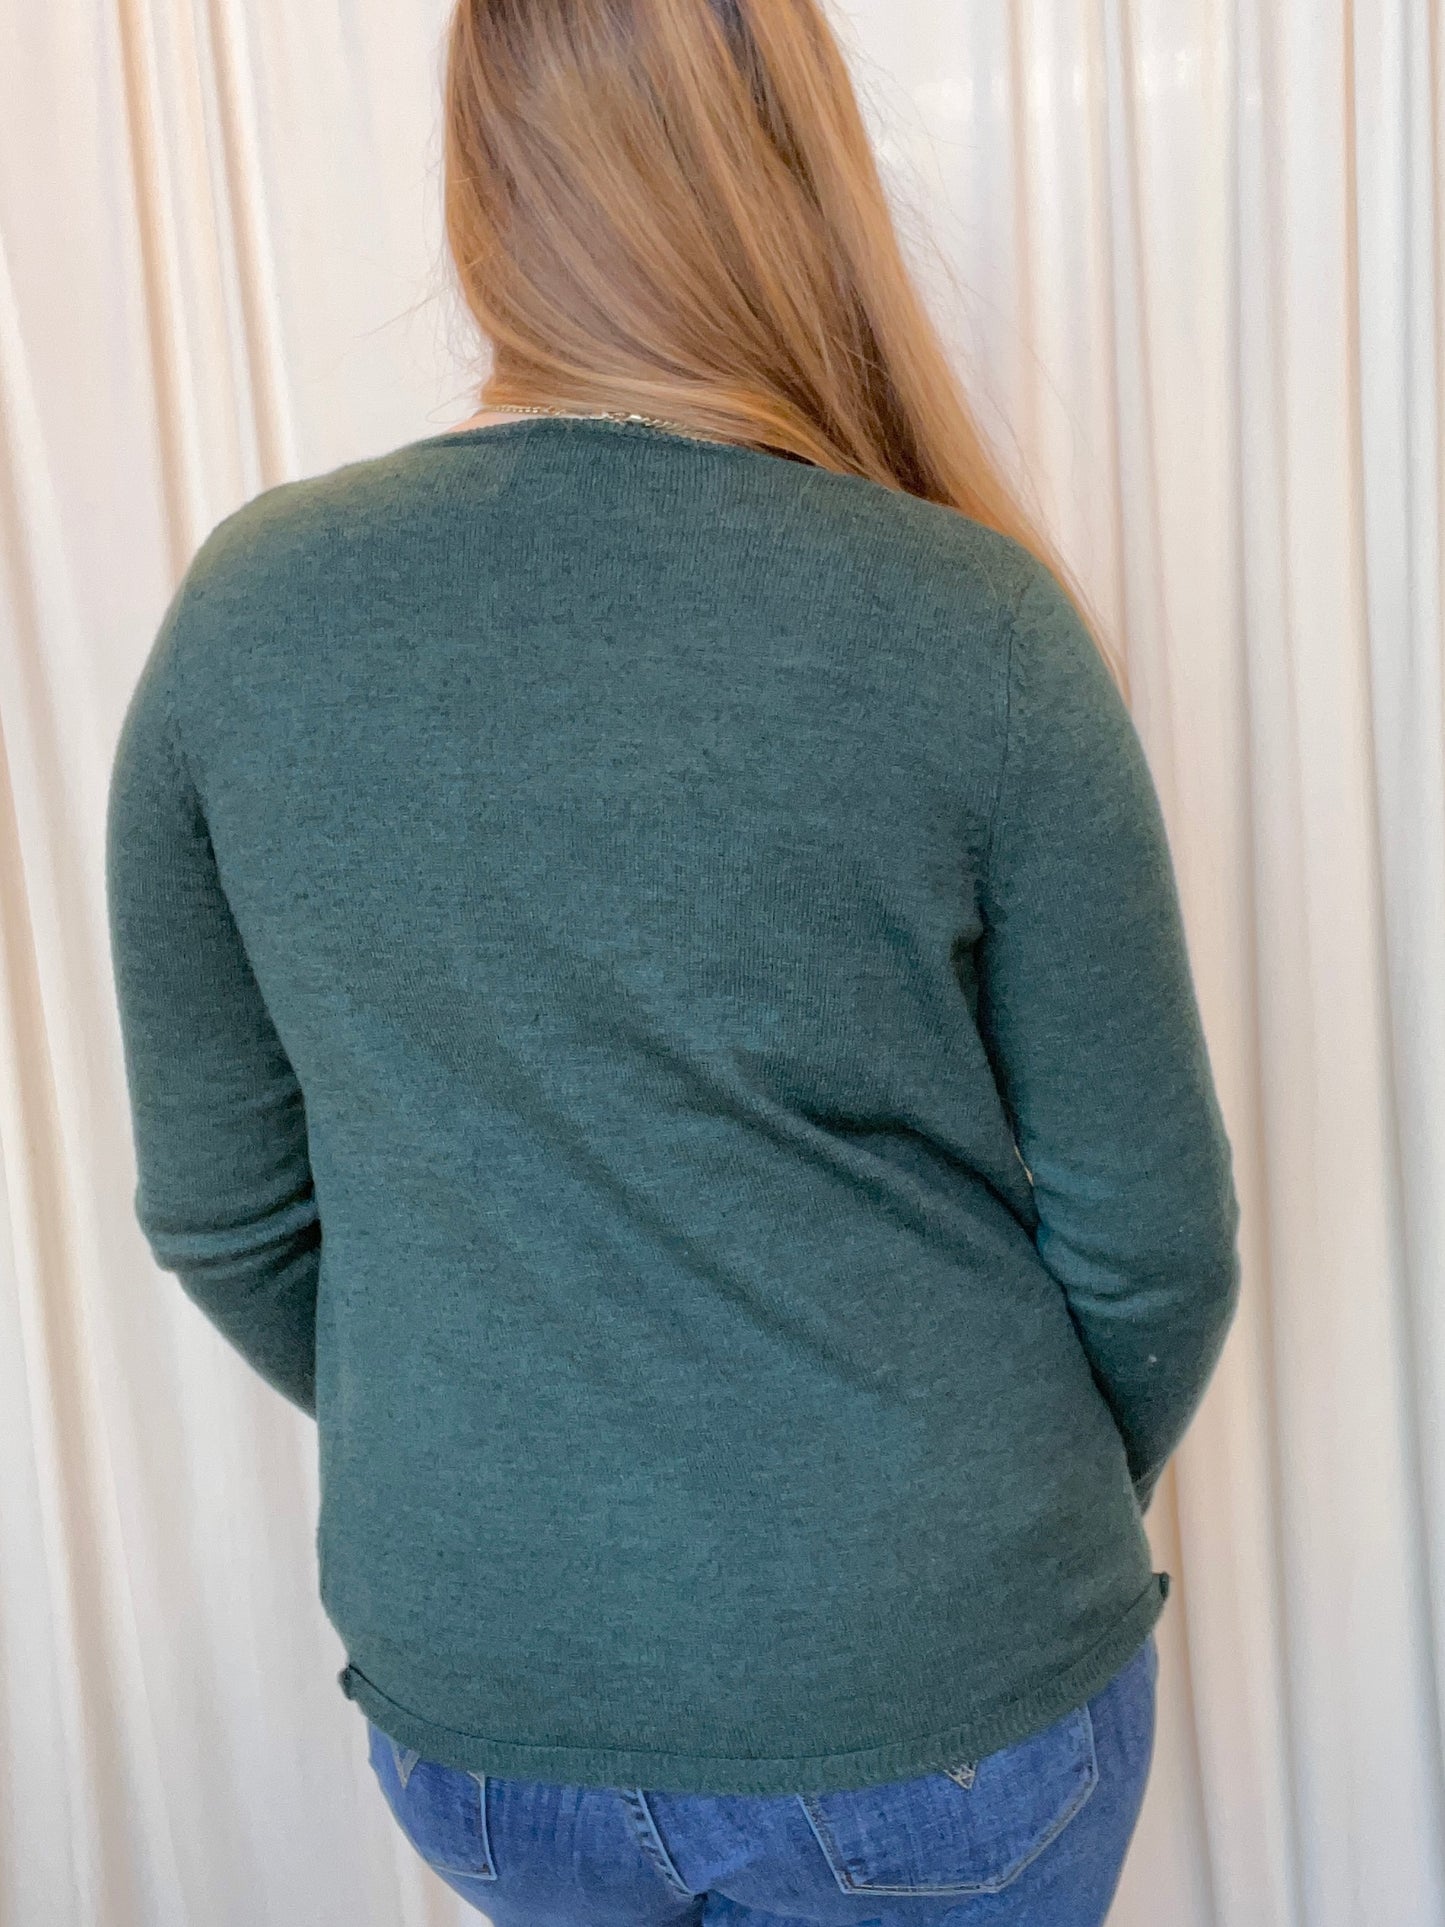 Green Wrap Front Sweater - Medium